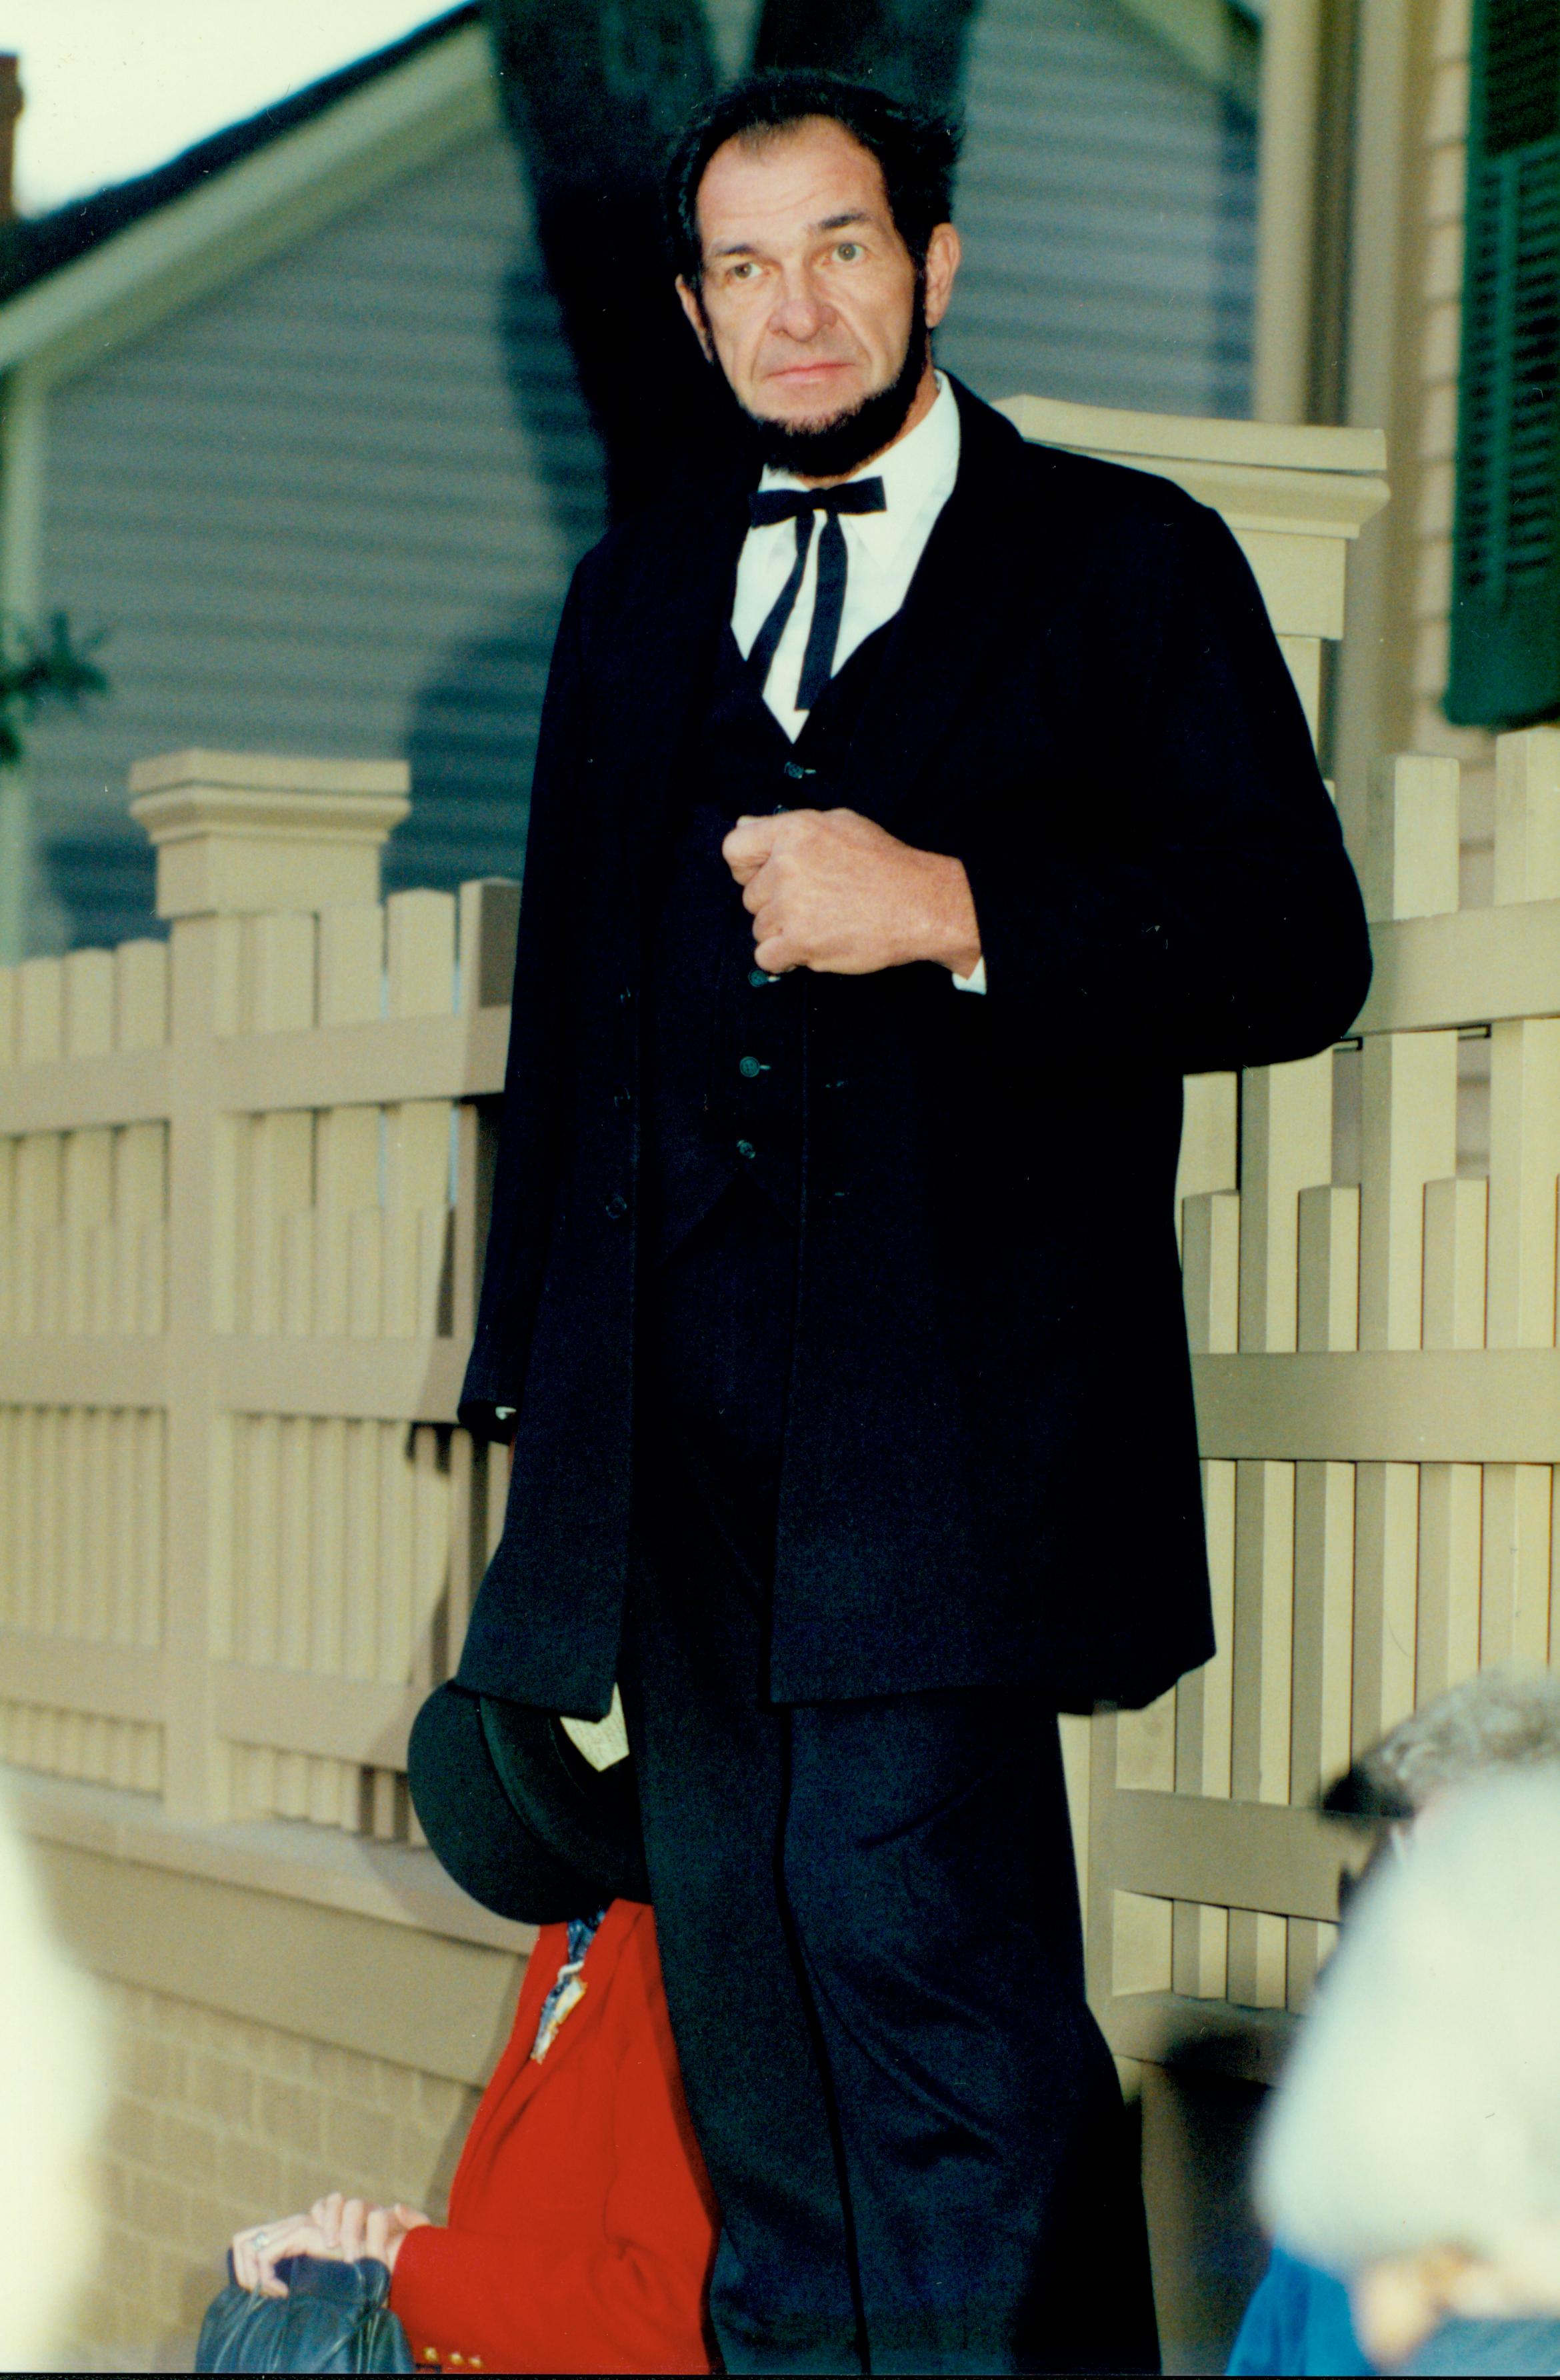 Harry Hahn as Lincoln Interpretation, Costumes